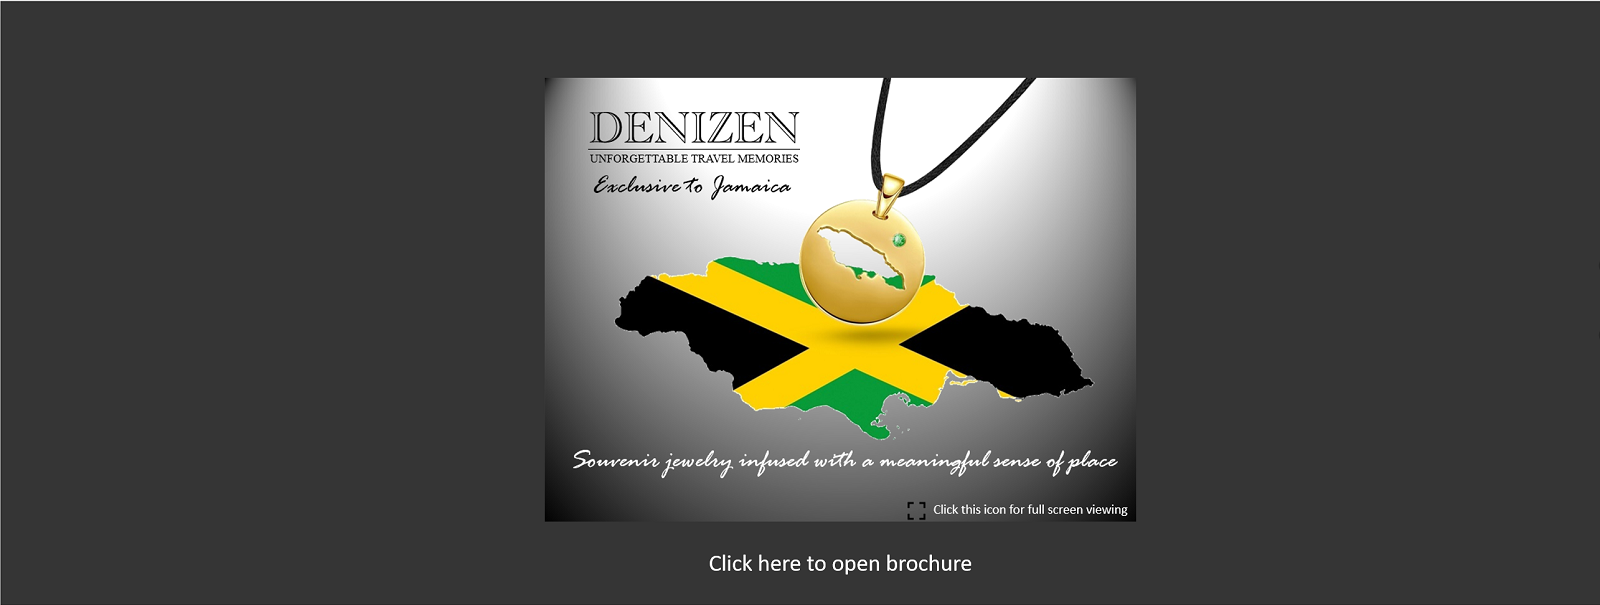 DENIZEN bracelets of Jamaica